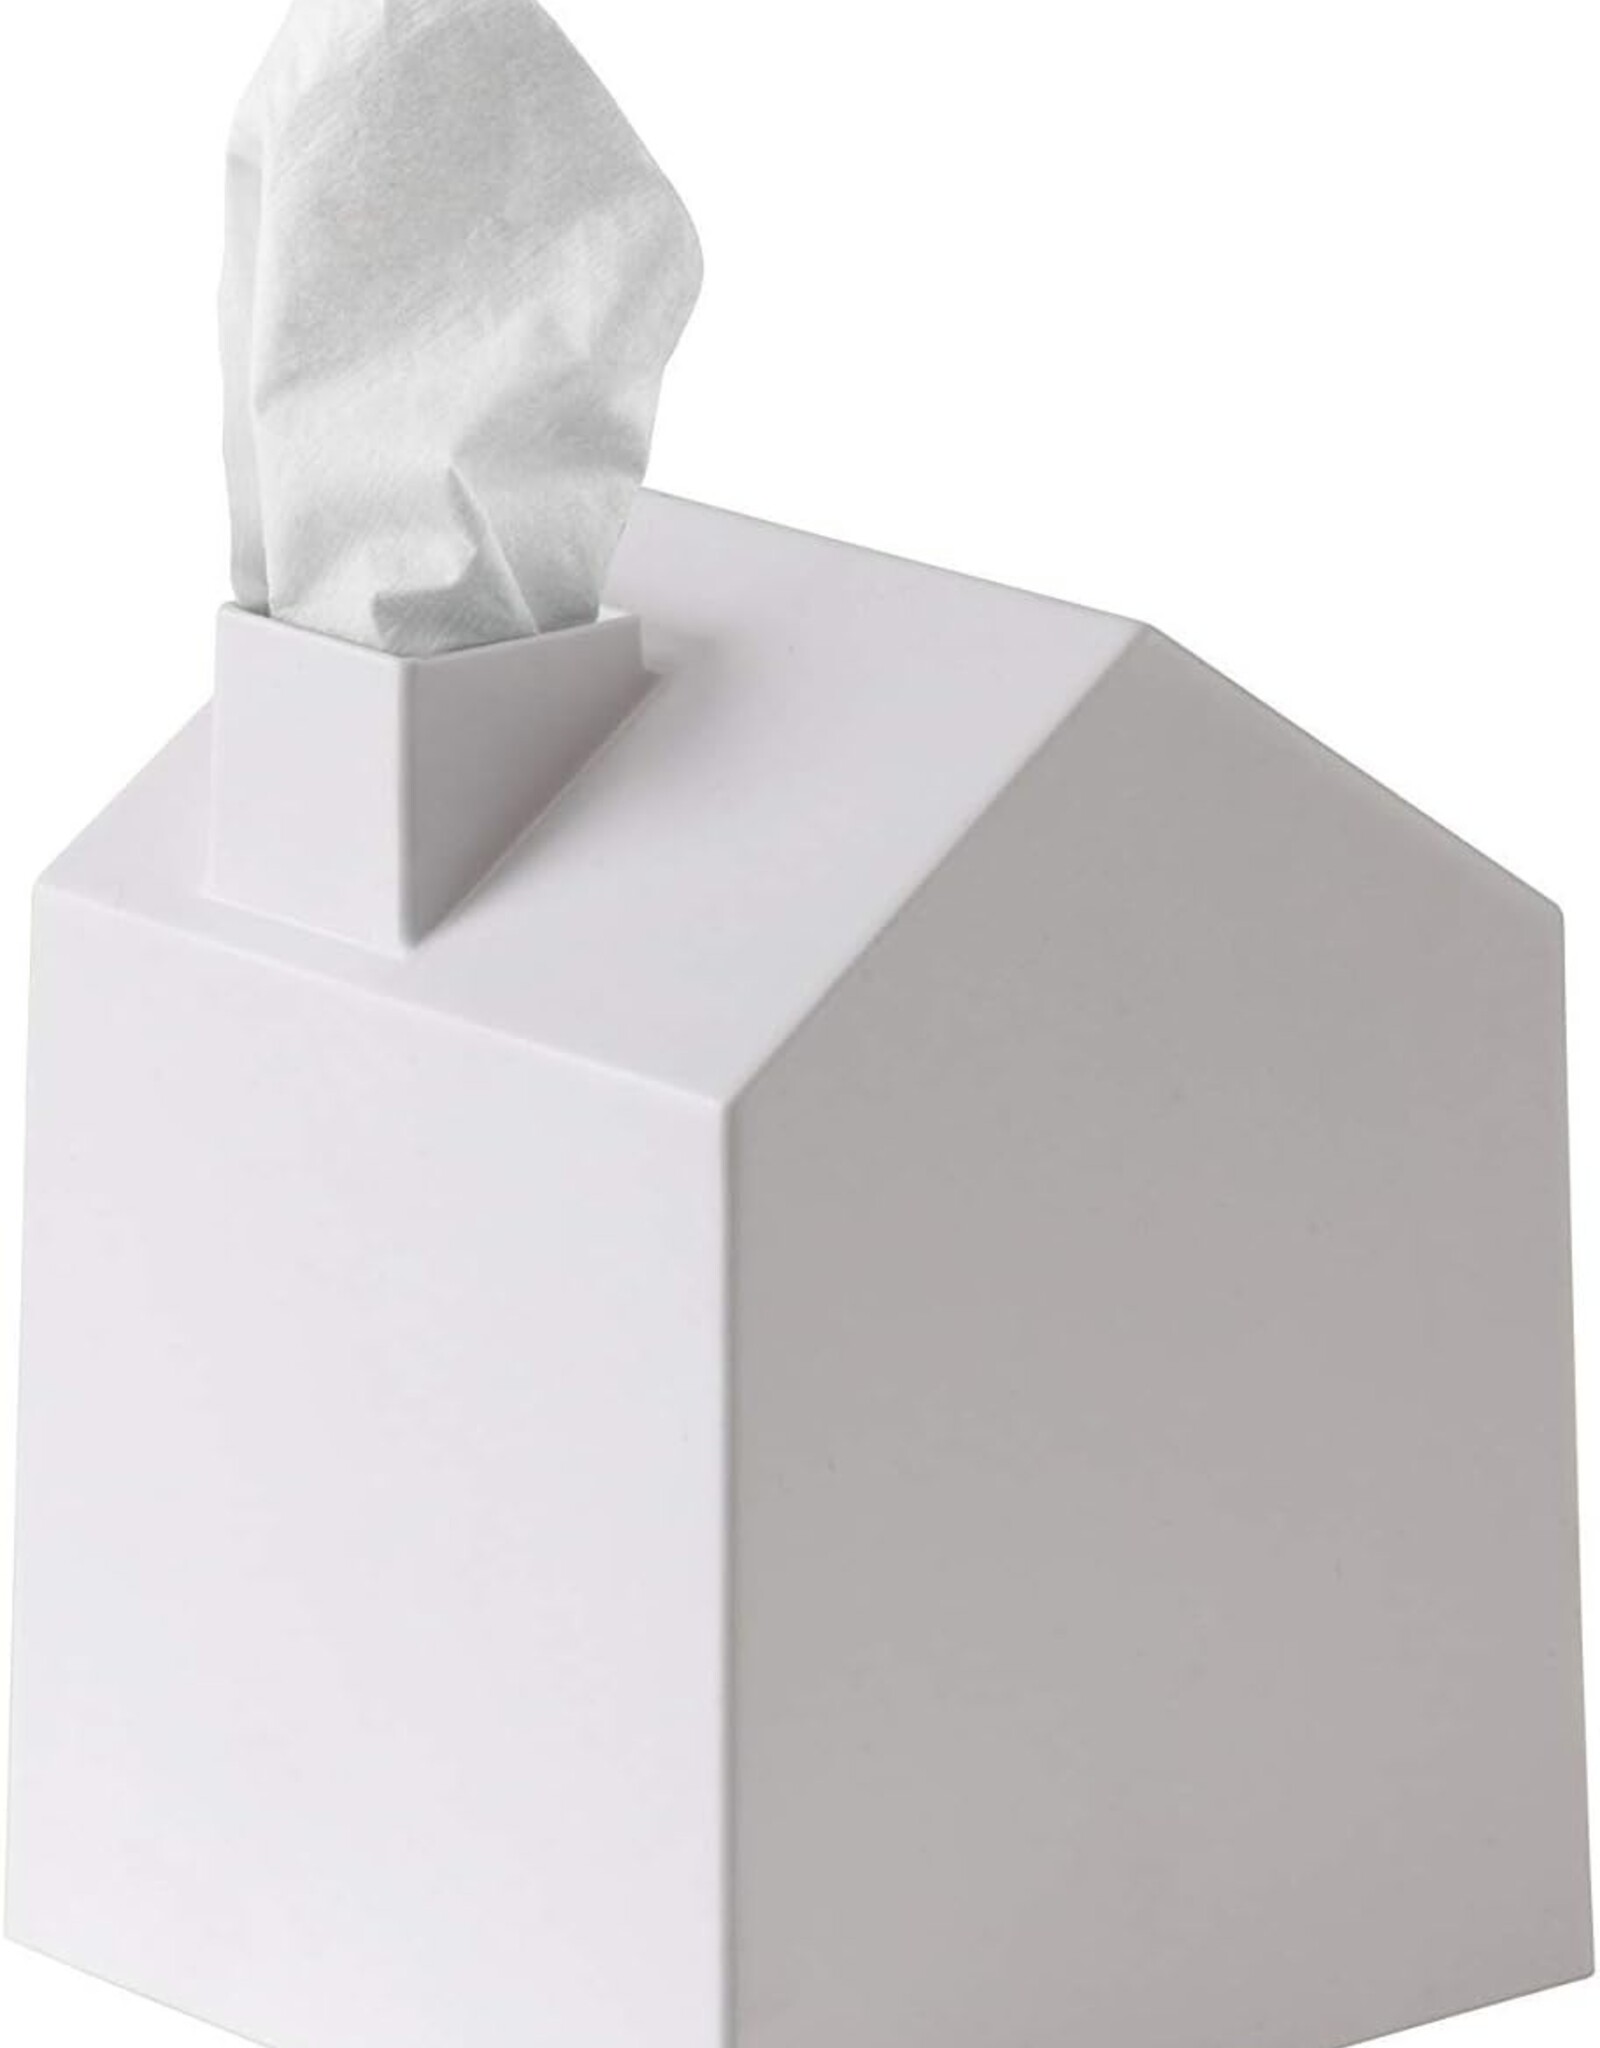 Umbra Tissue Box Cover - Casa